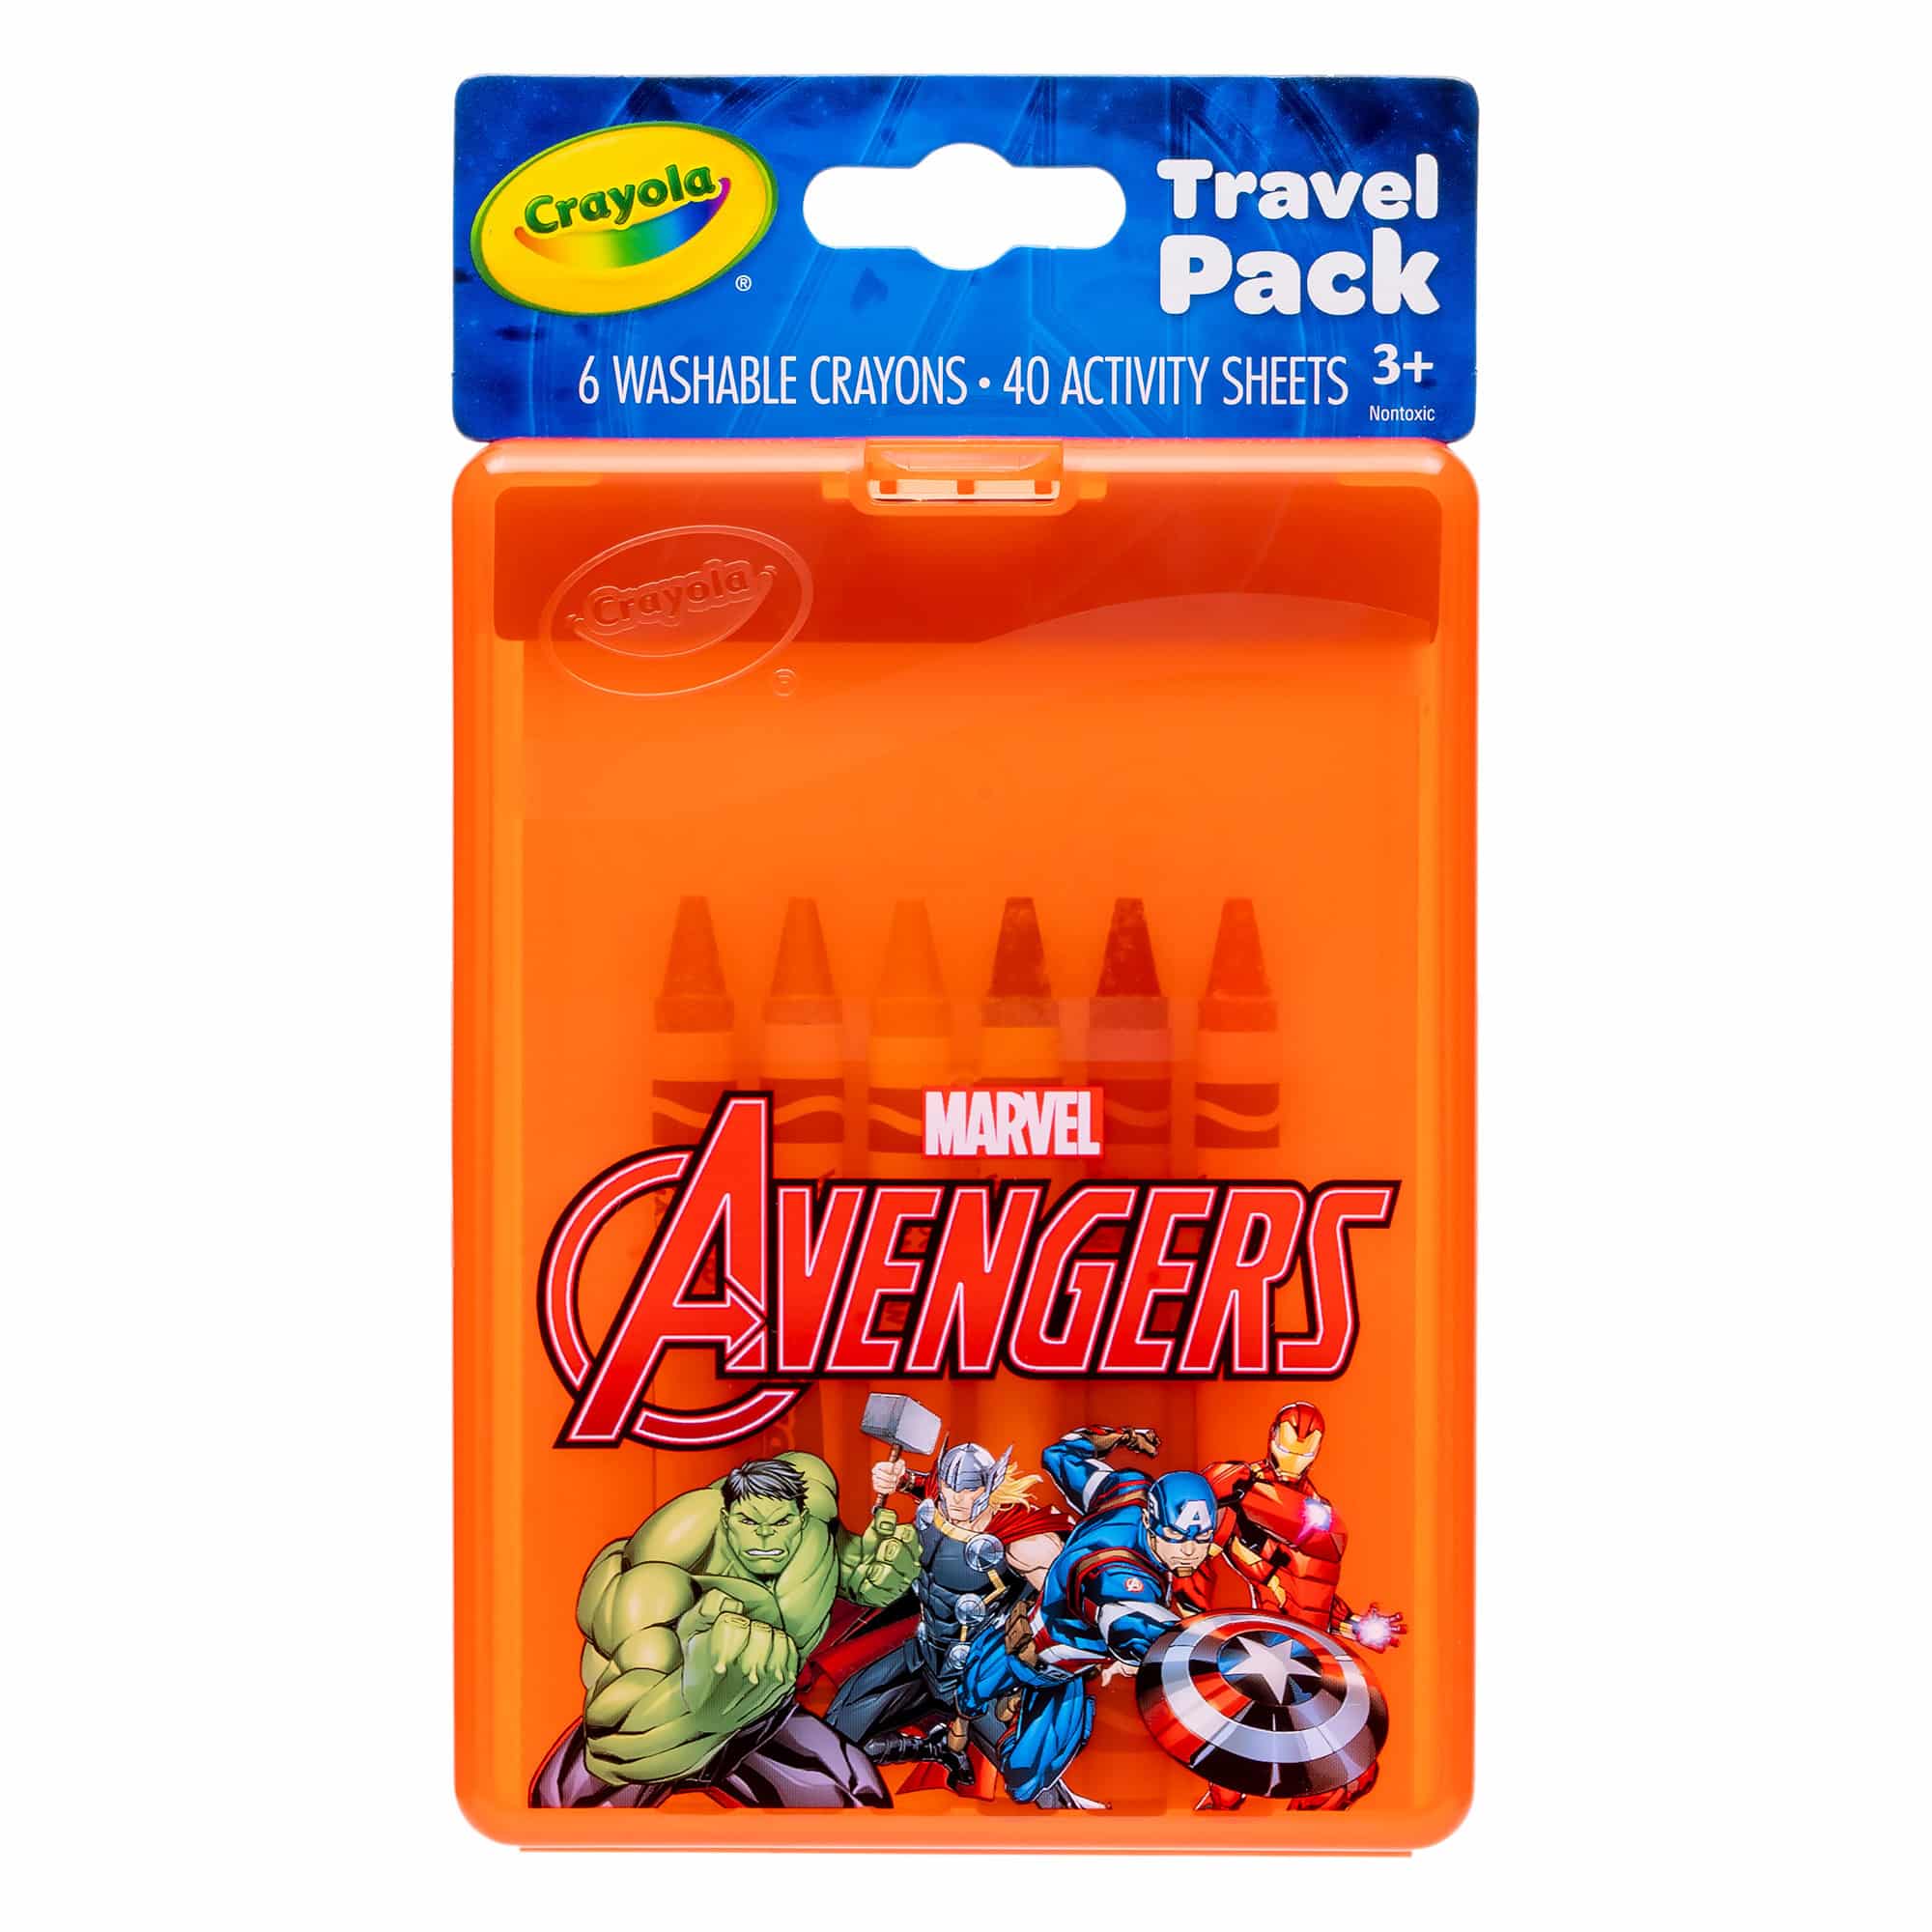 Crayola - Marvel Avengers Travel Pack